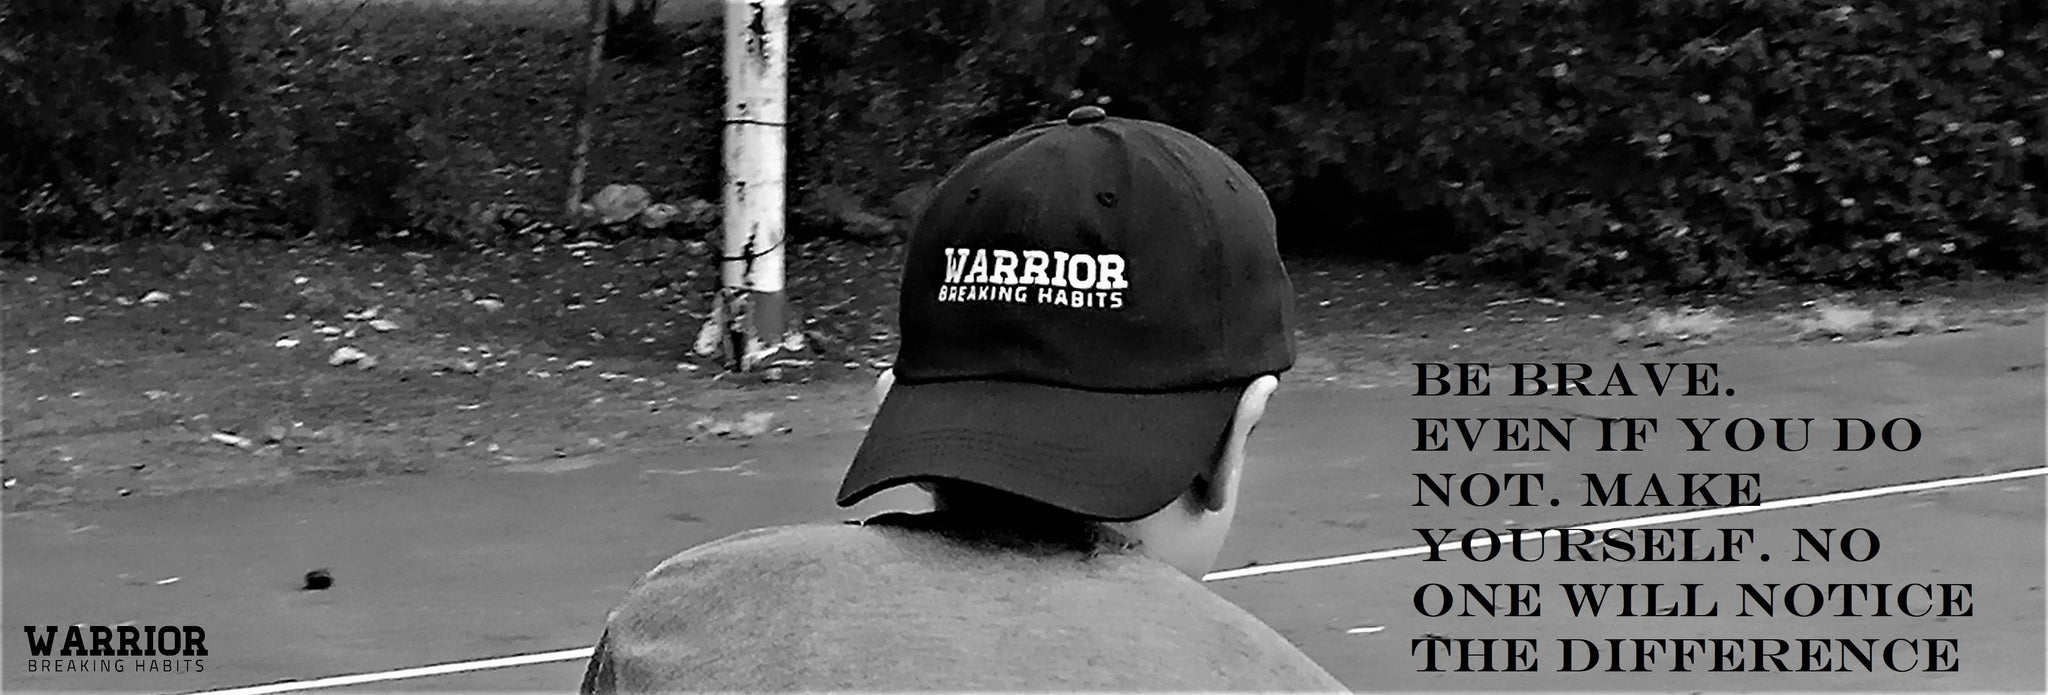 Warrior's inspiration #4